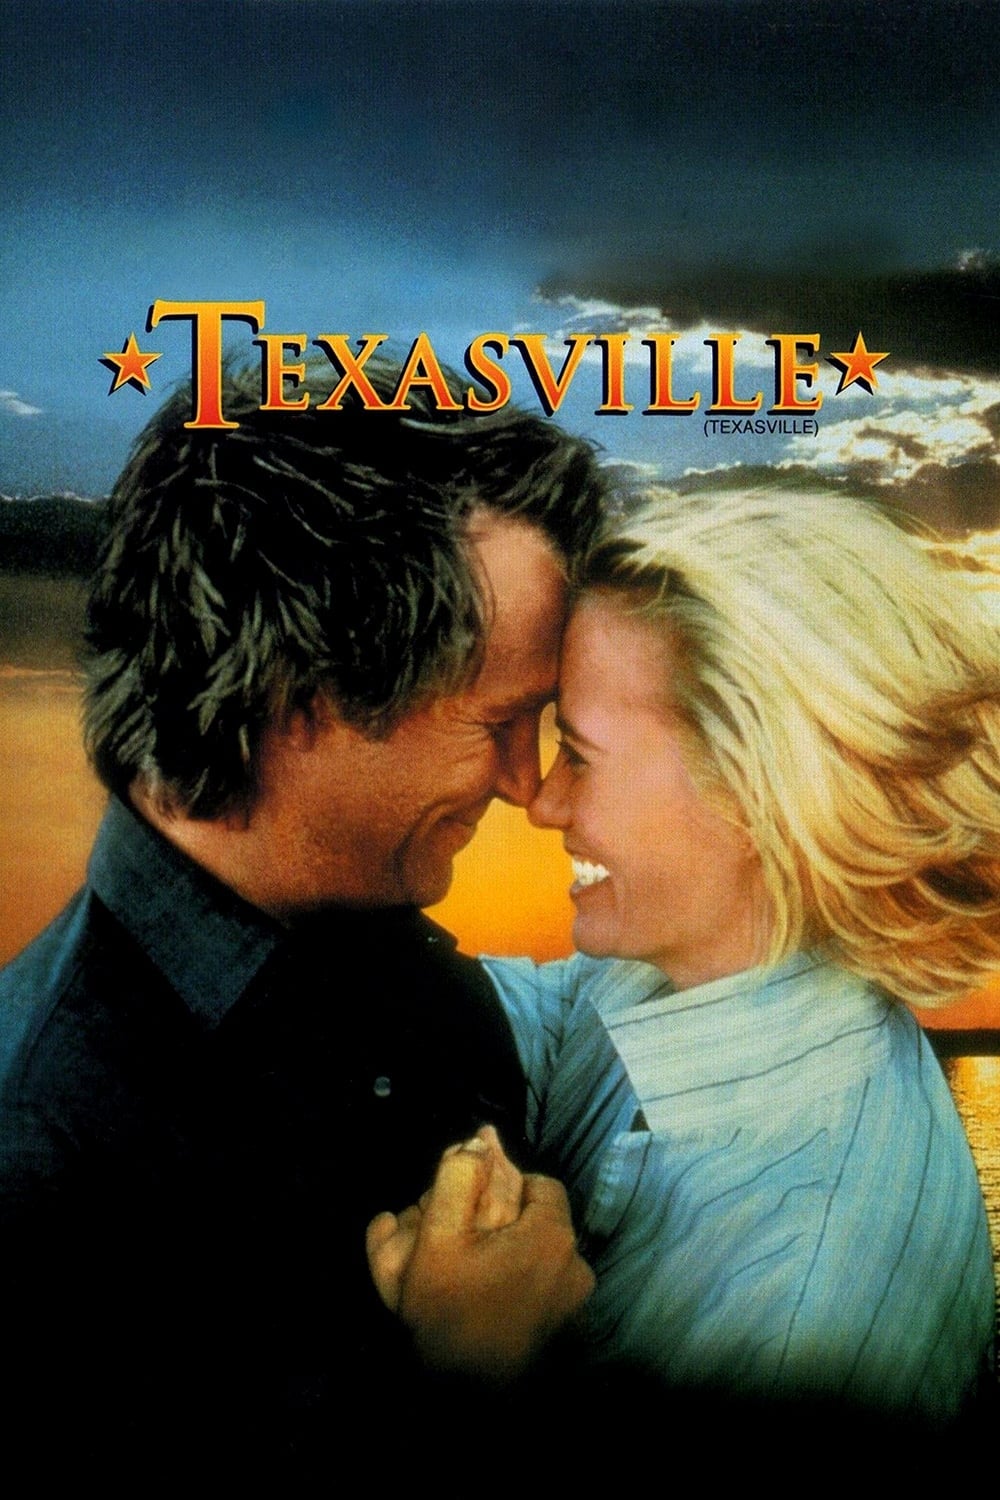 Plakat von "Texasville"